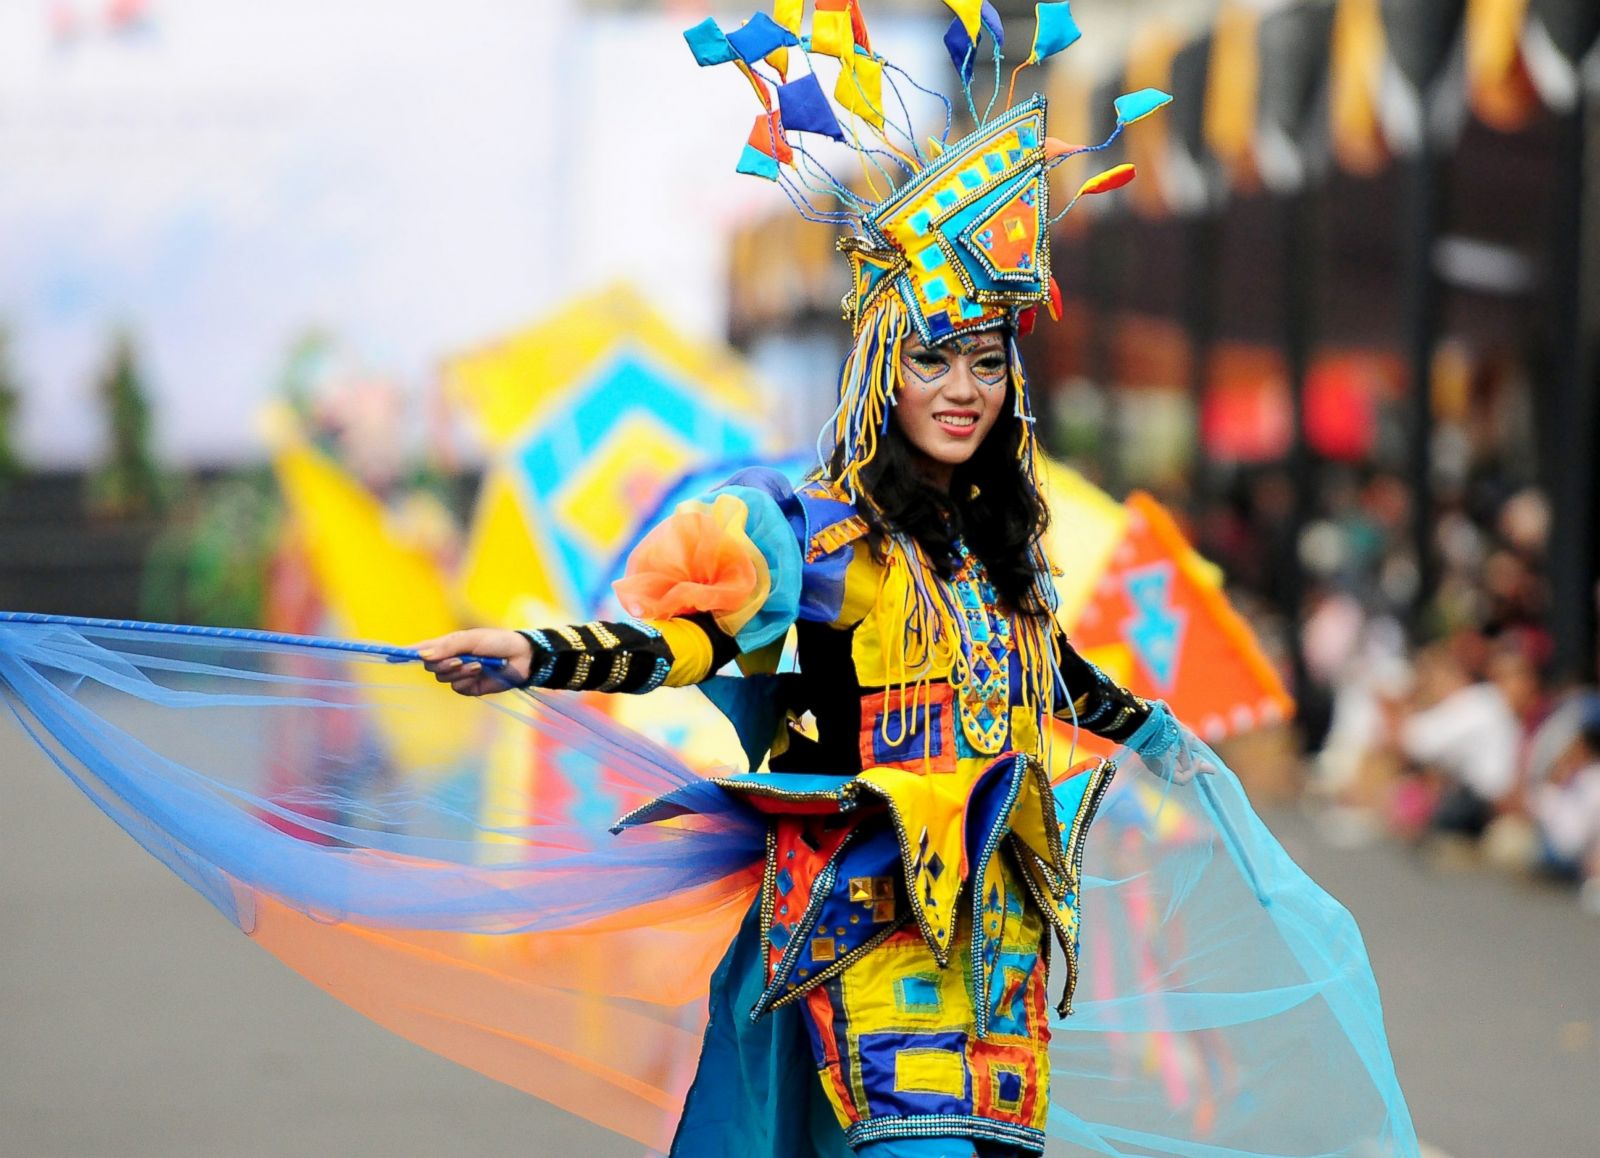 Карнавал одежда. Костюм воздушный змей. Carnival одежда. Корейский карнавал одежда. Costumes for Carnival.